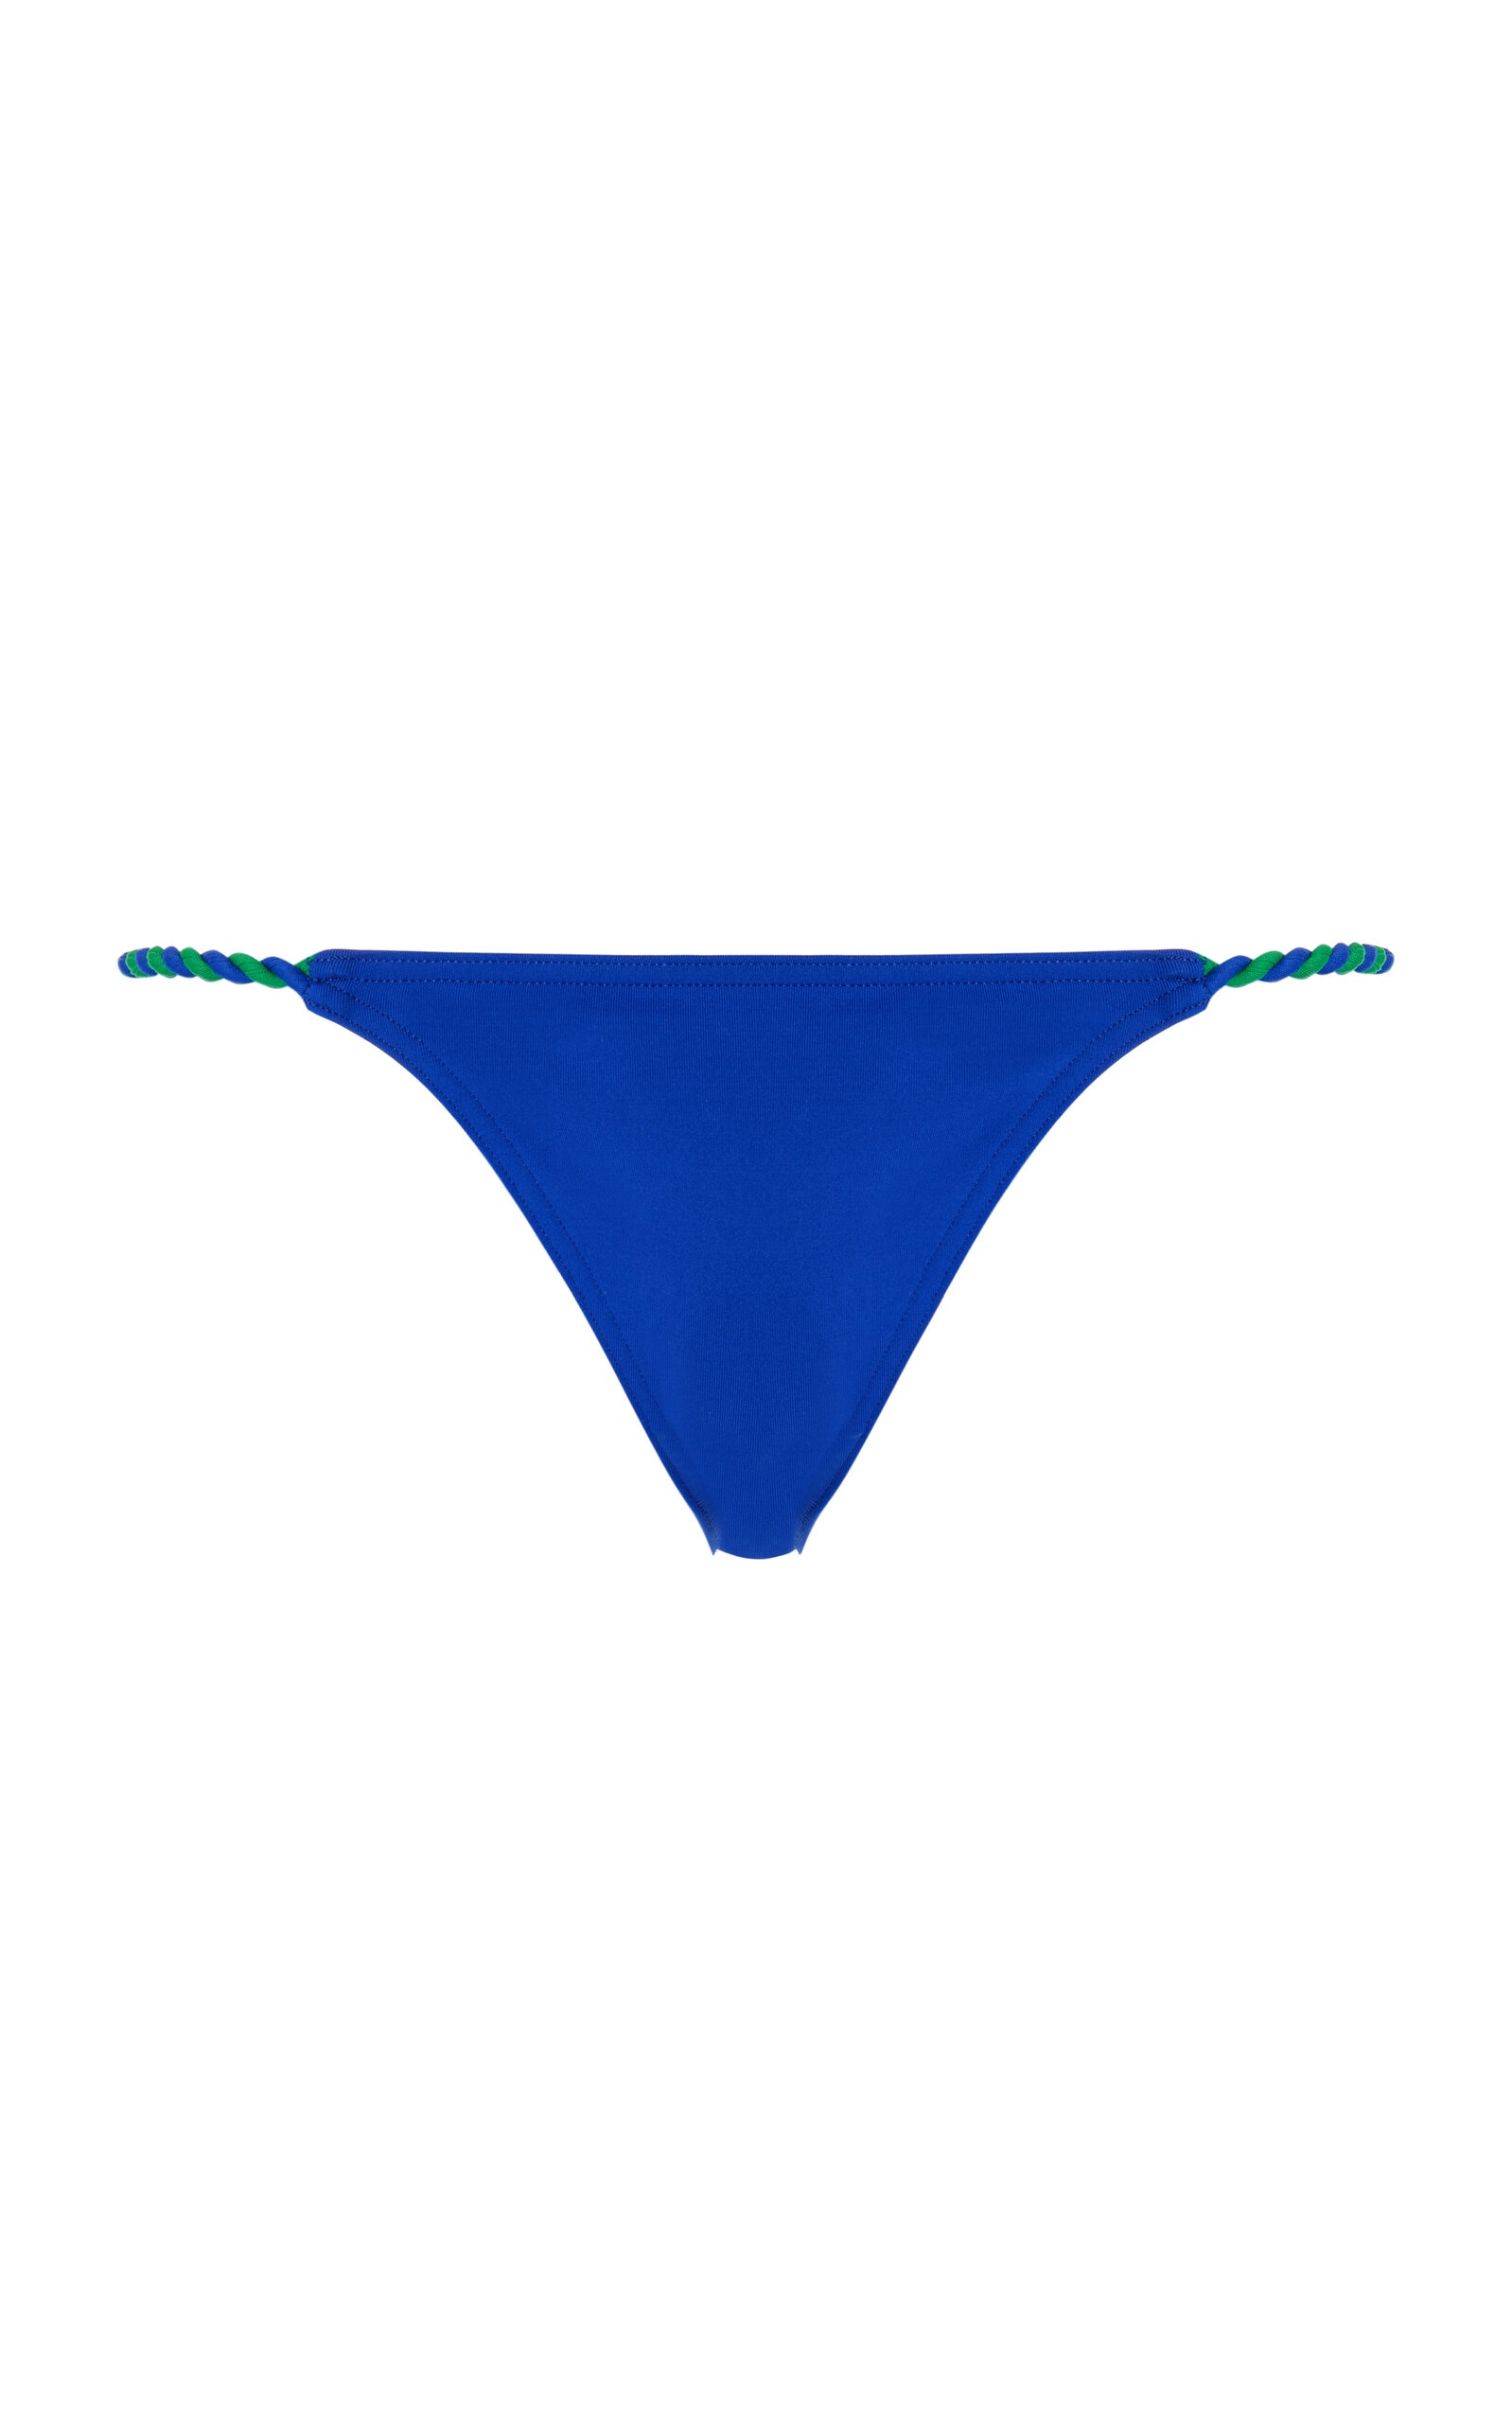 Salto Bikini Bottom blue - 1